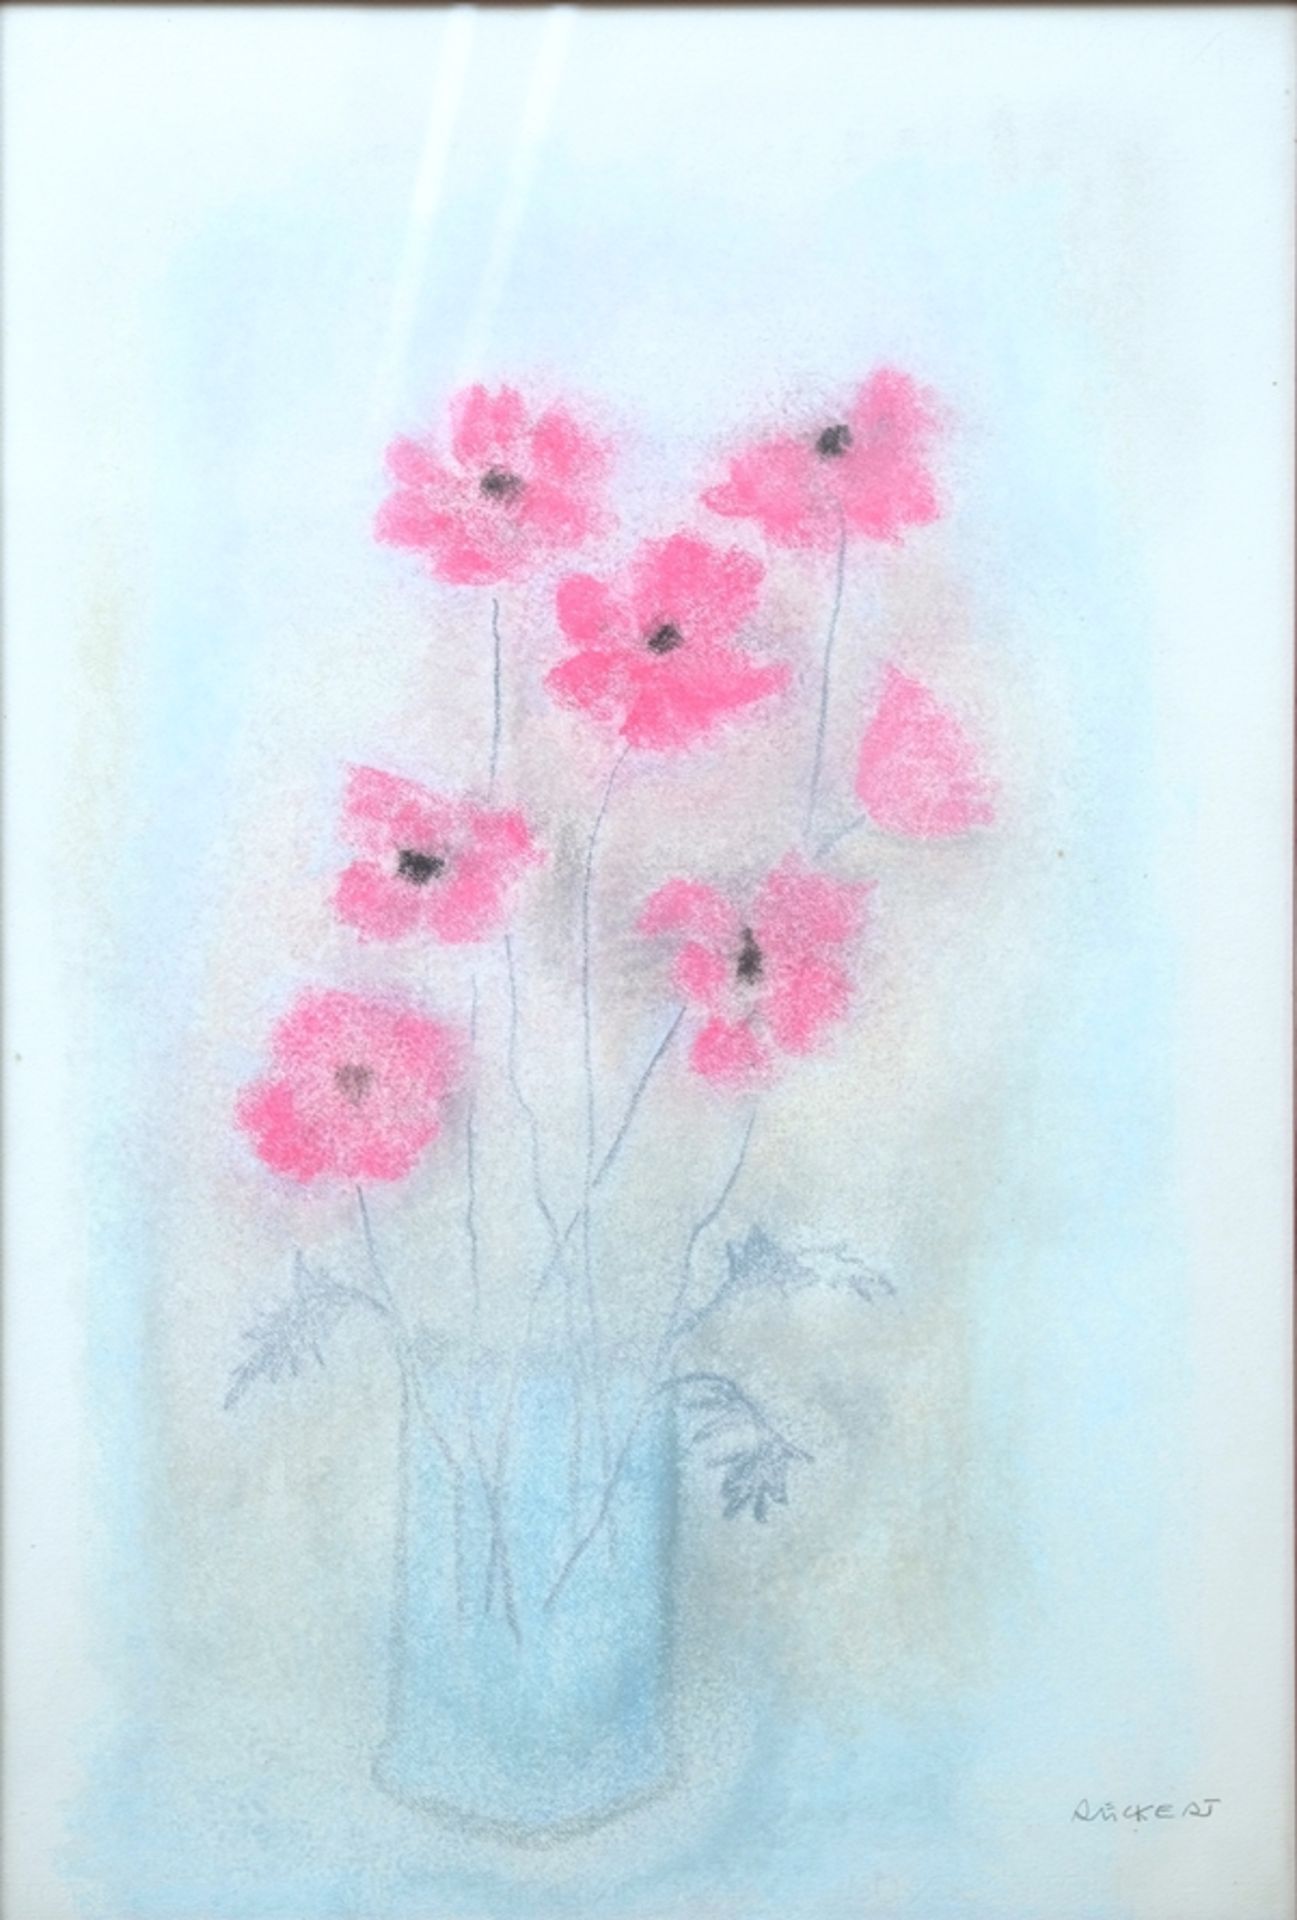 Rückert, Erich-Andreas (1920-2016) Poppies, pastel chalk on paper.